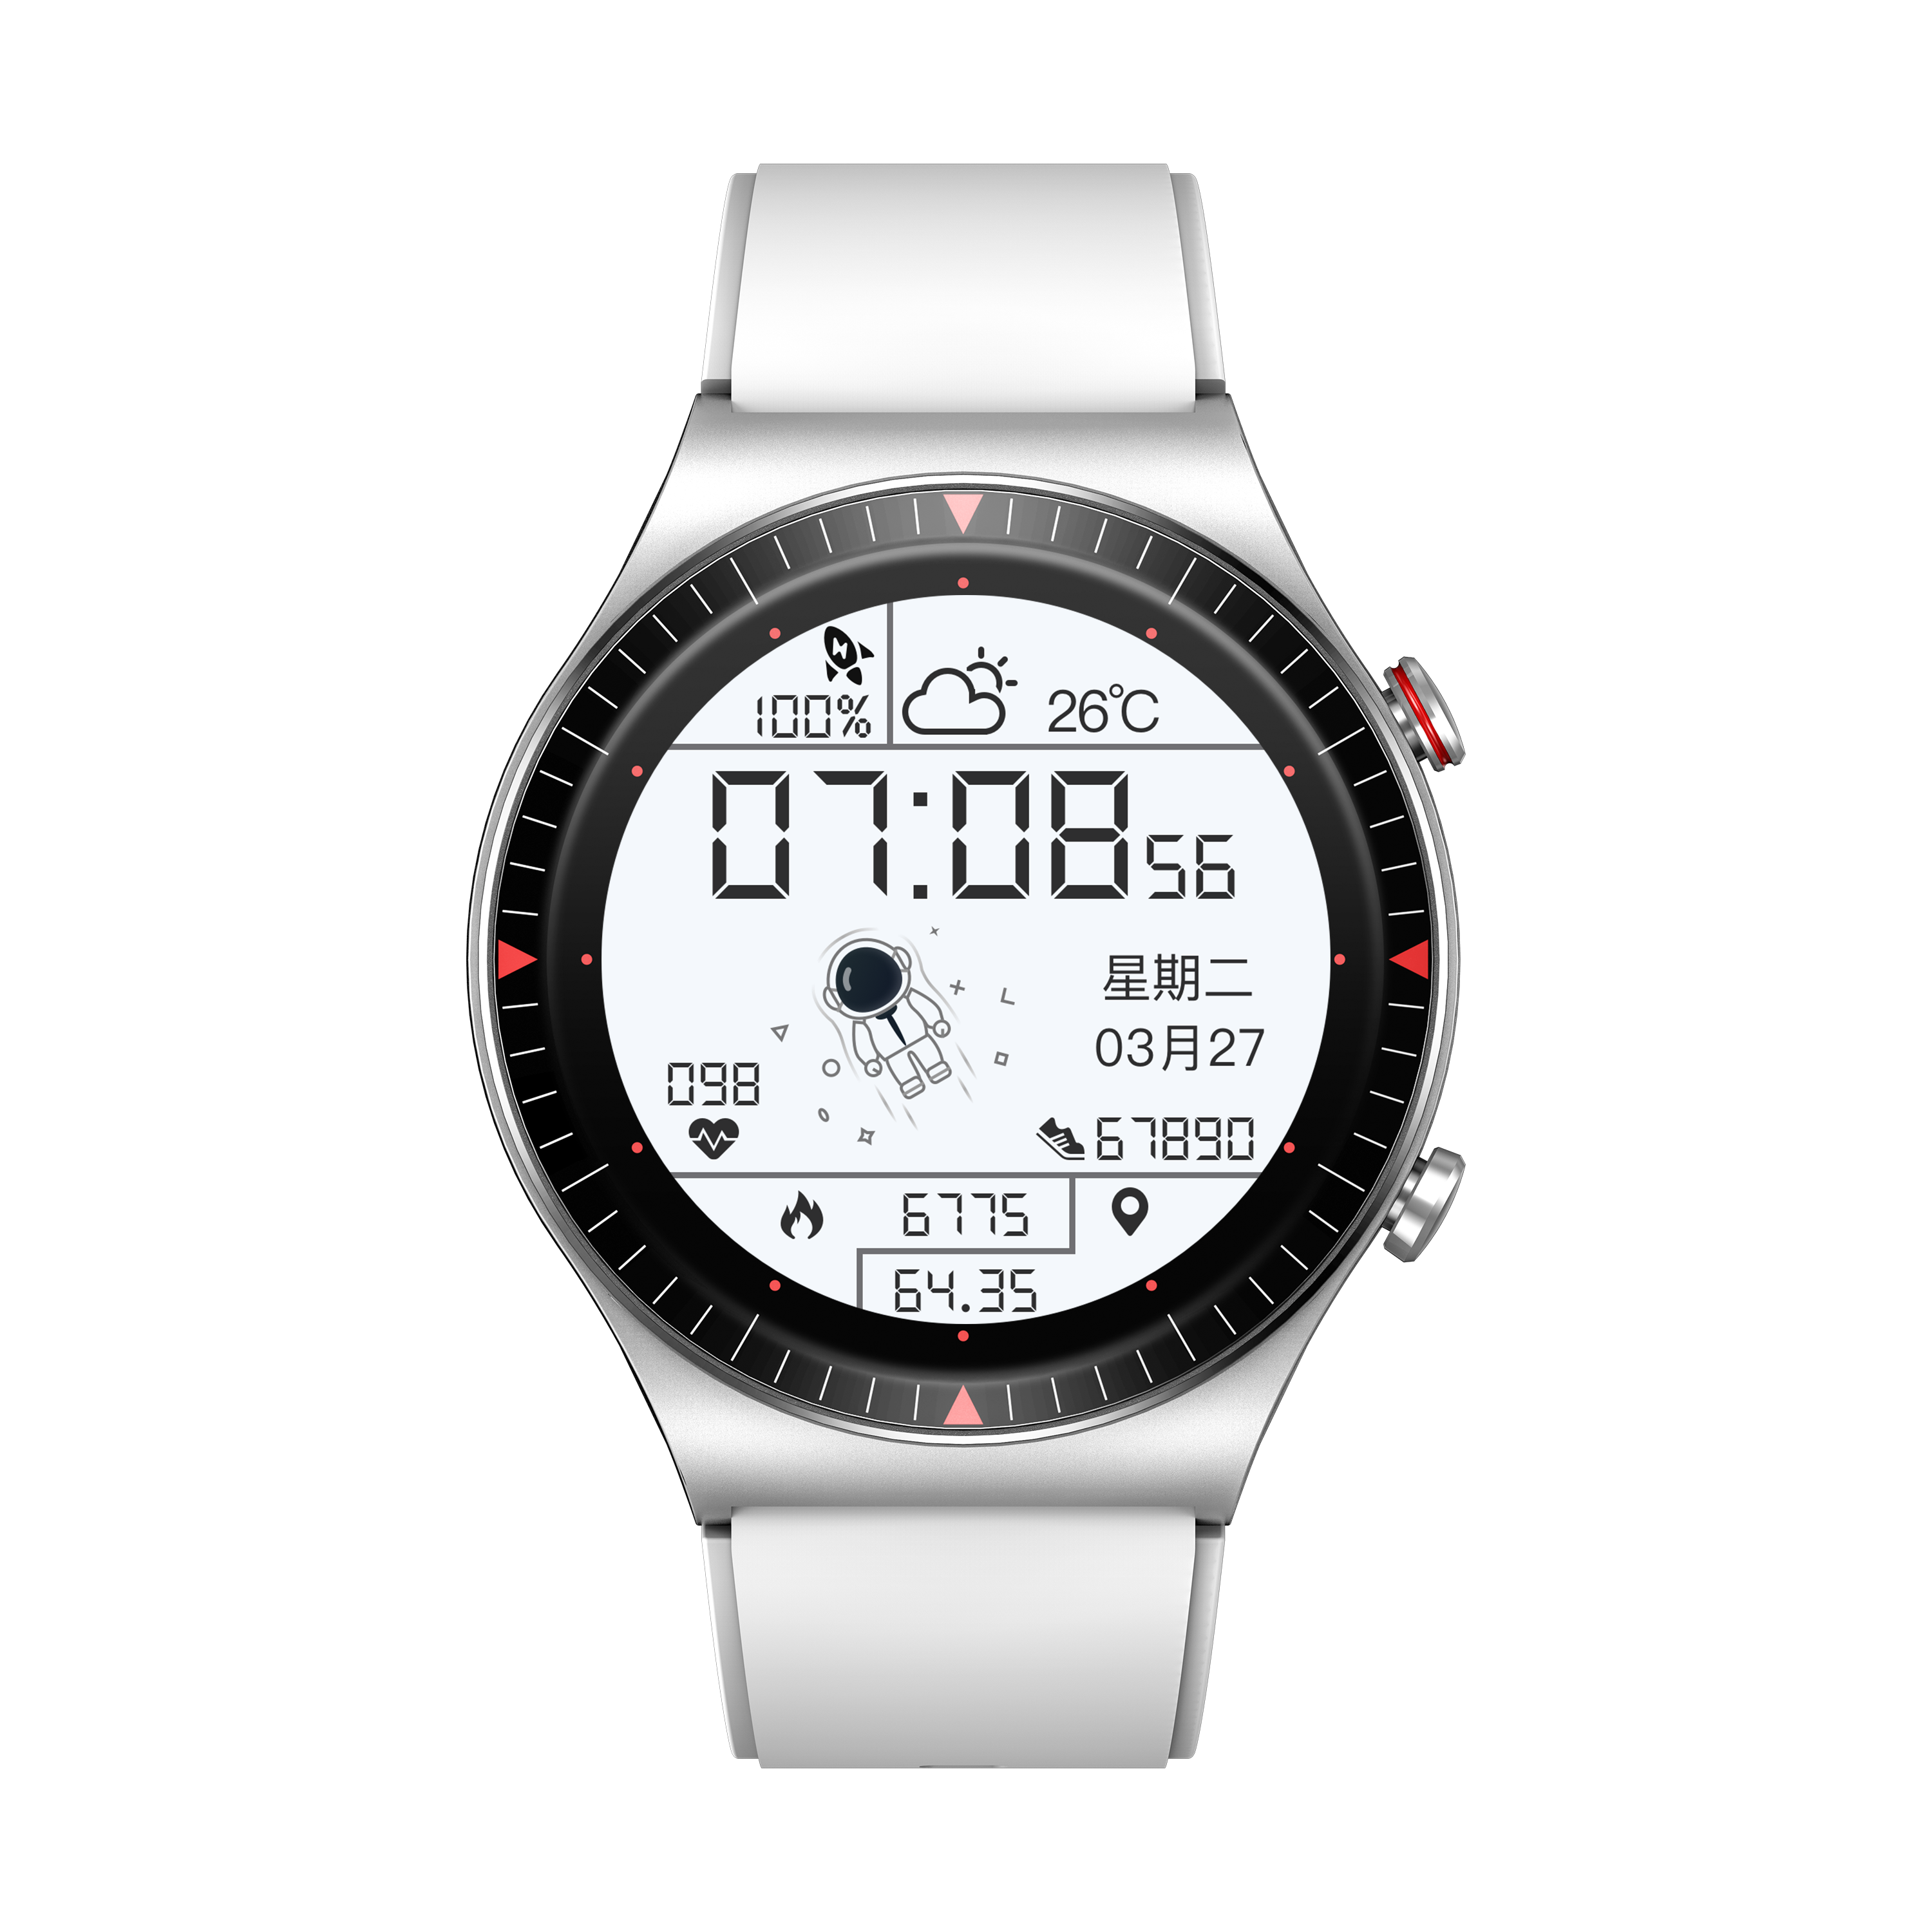 IP67 Waterproof Heart Rate Blood Pressure SpO2 Monitoring Smart Wristband 